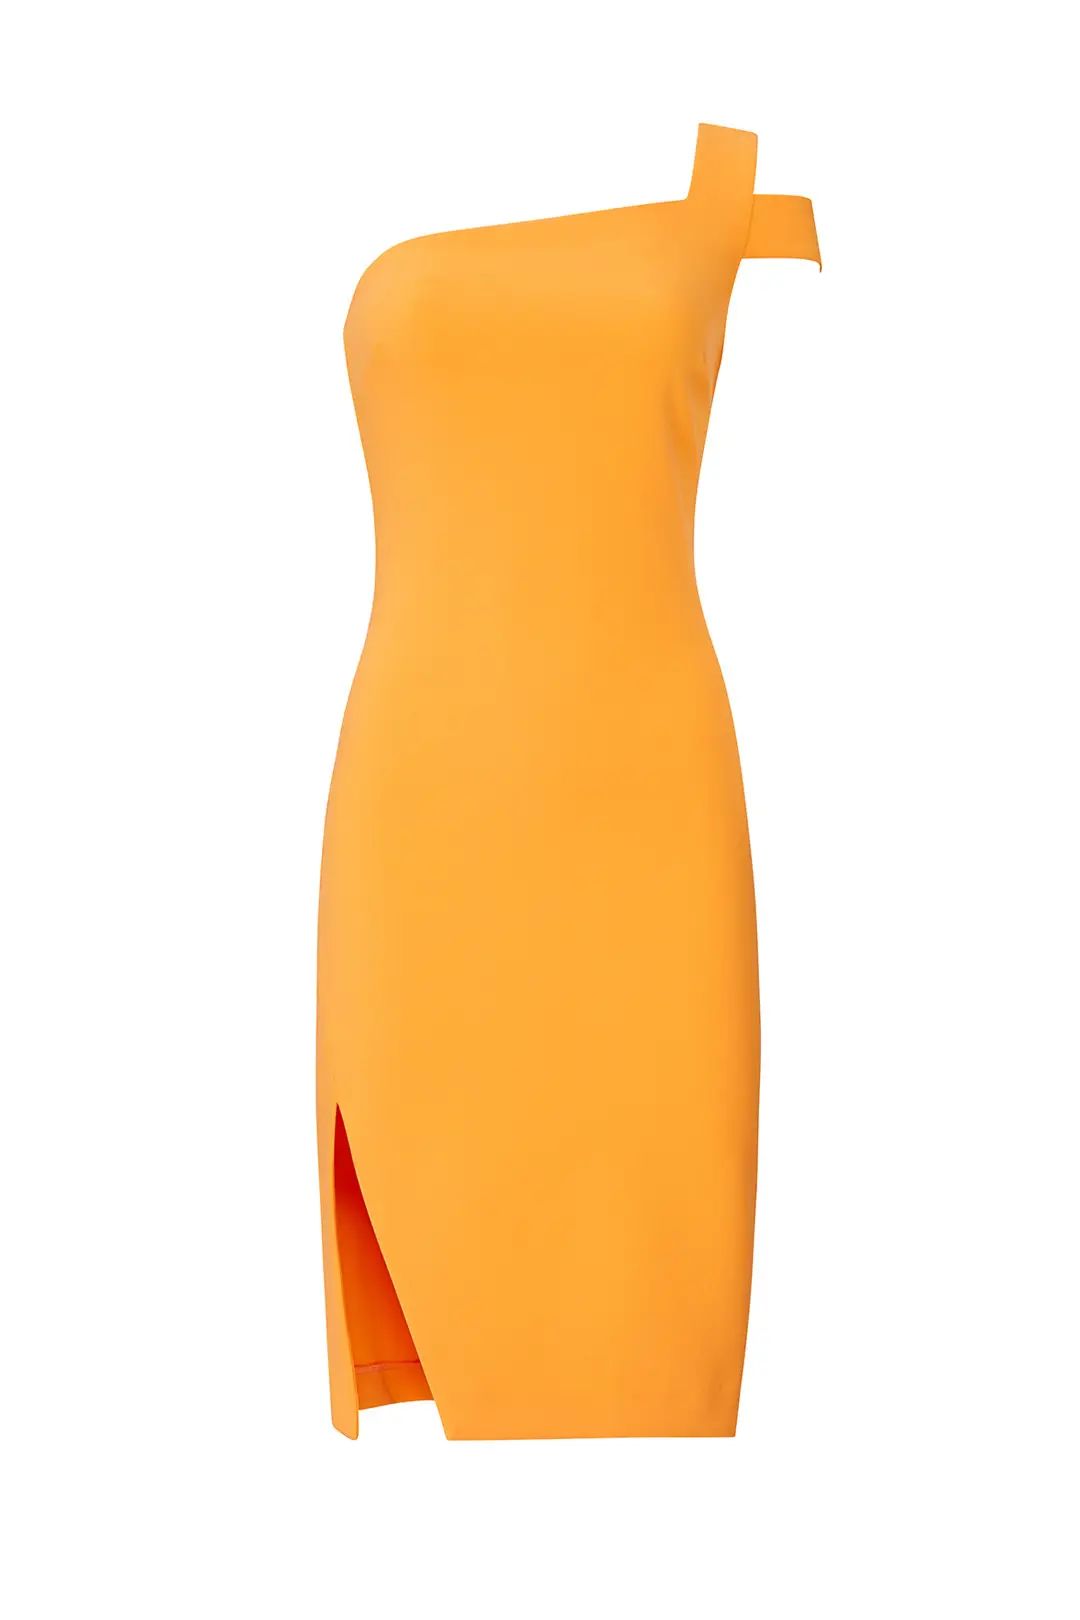 LIKELY Orange Packard Dress | Rent The Runway